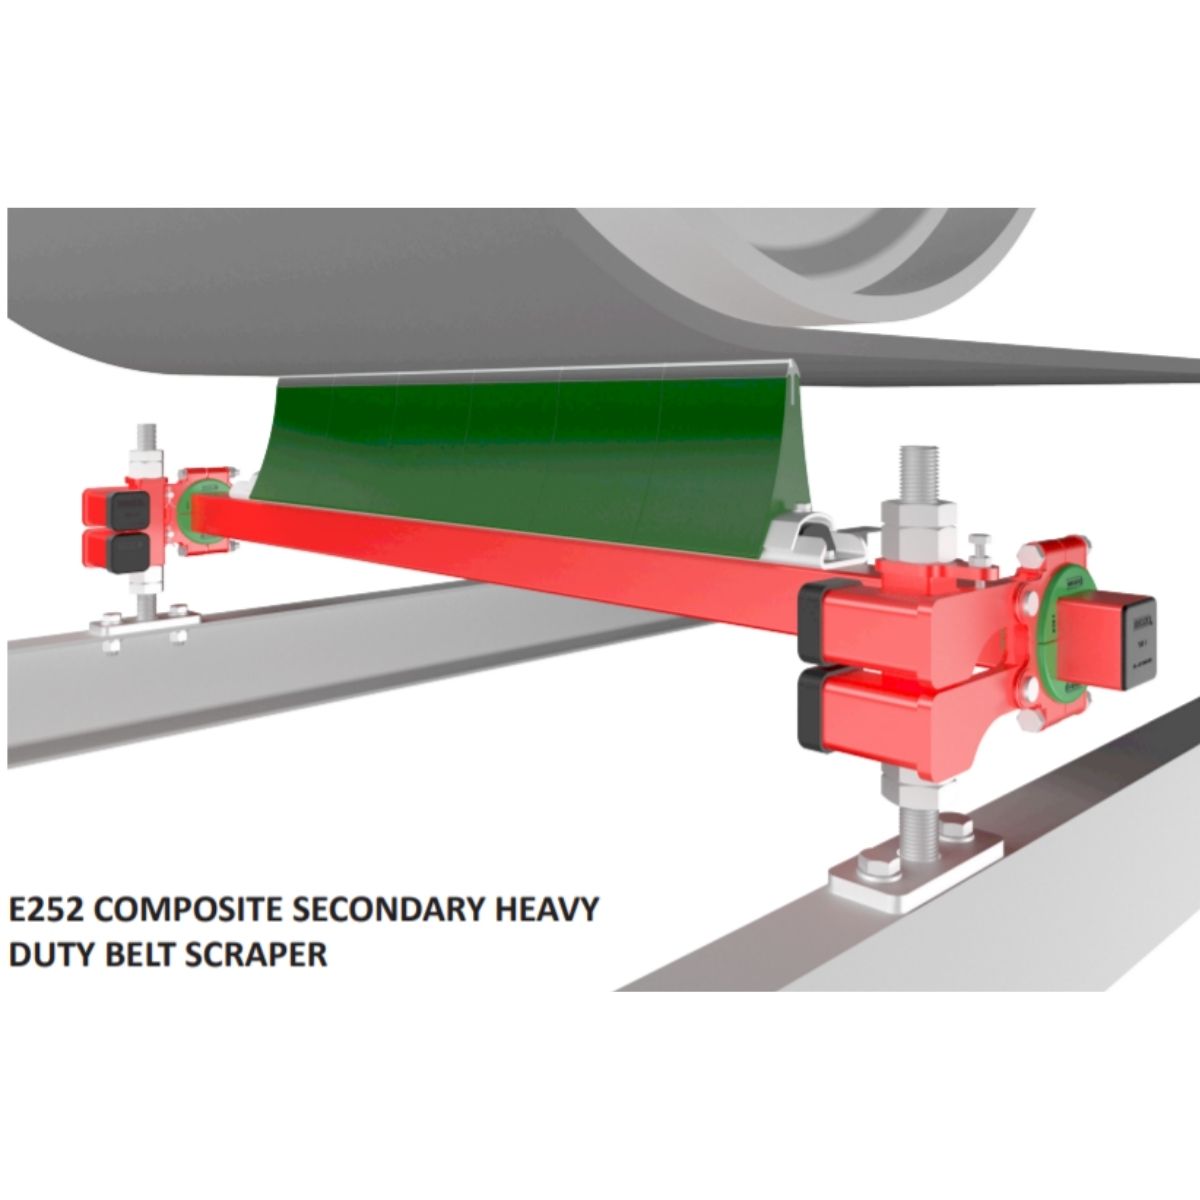 E252 Composite Secondary Heavy Duty Belt Cleaner / Limpiador de banda para trabajo pesado secundario compuesto E252